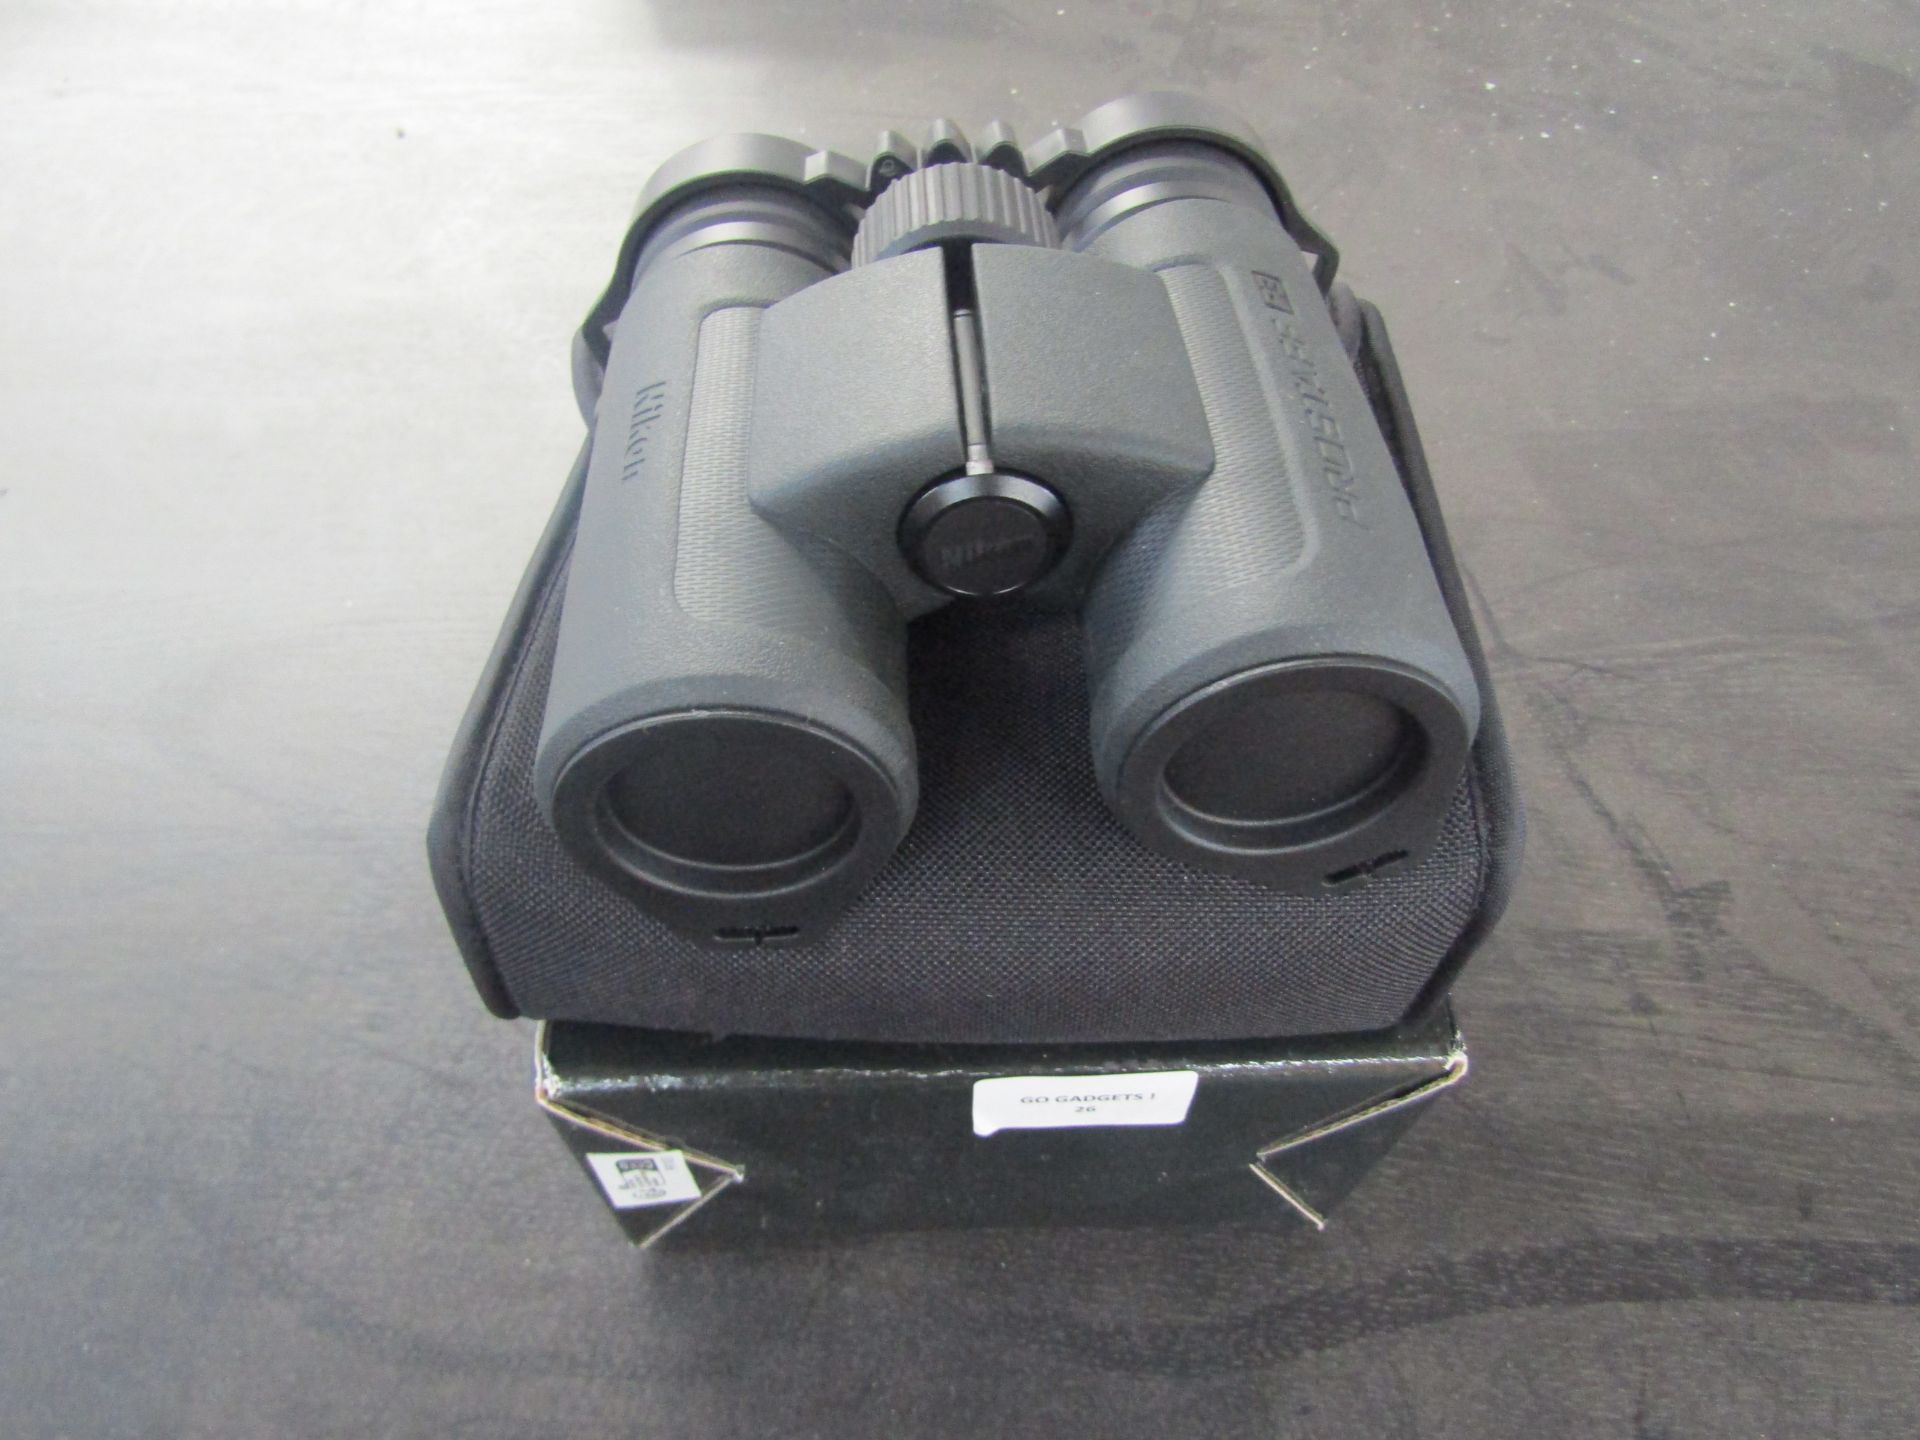 Nikon PROSTAFF P3 10x30 Binoculars - Look To Be In Good Condition & Boxed - RRP CIRCA £139.00